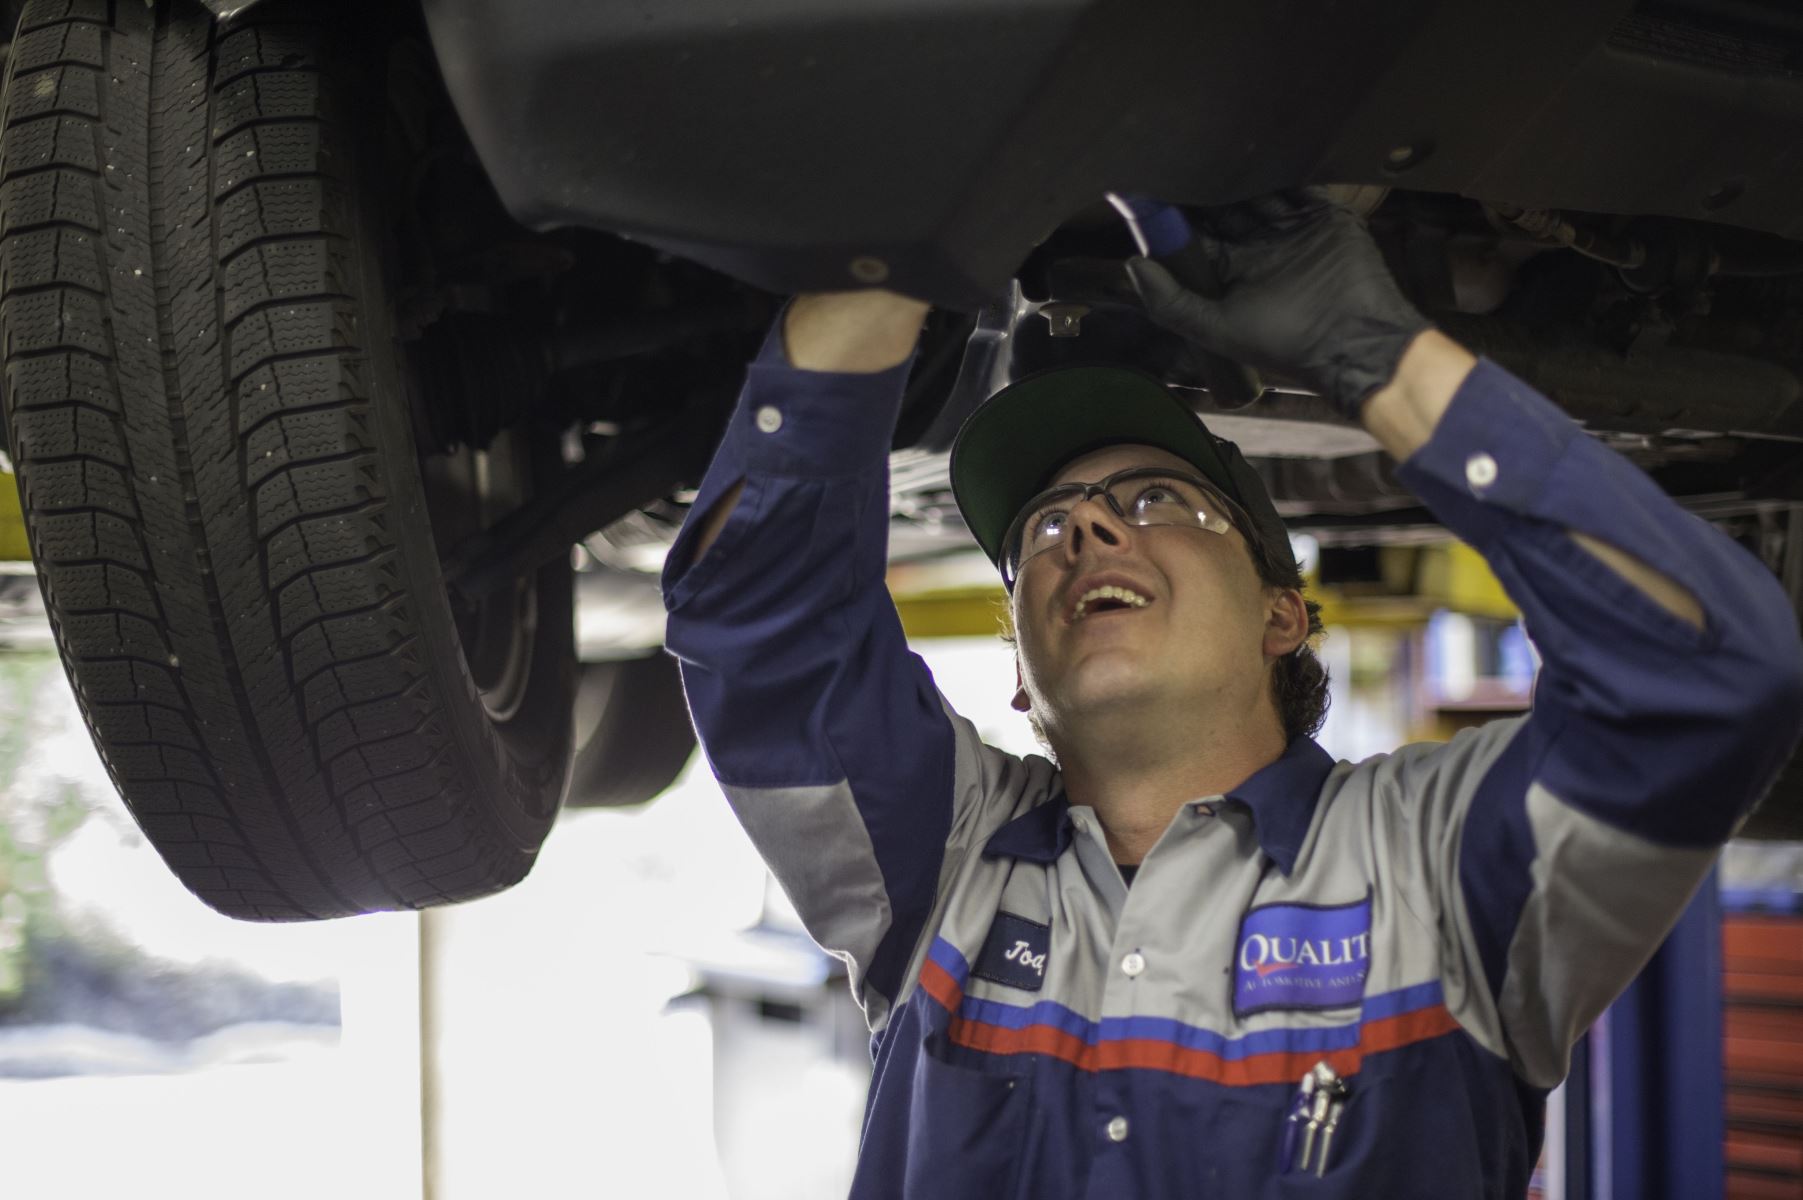 Scheduled Truckee Auto Maintenance | Quality Automotive Servicing